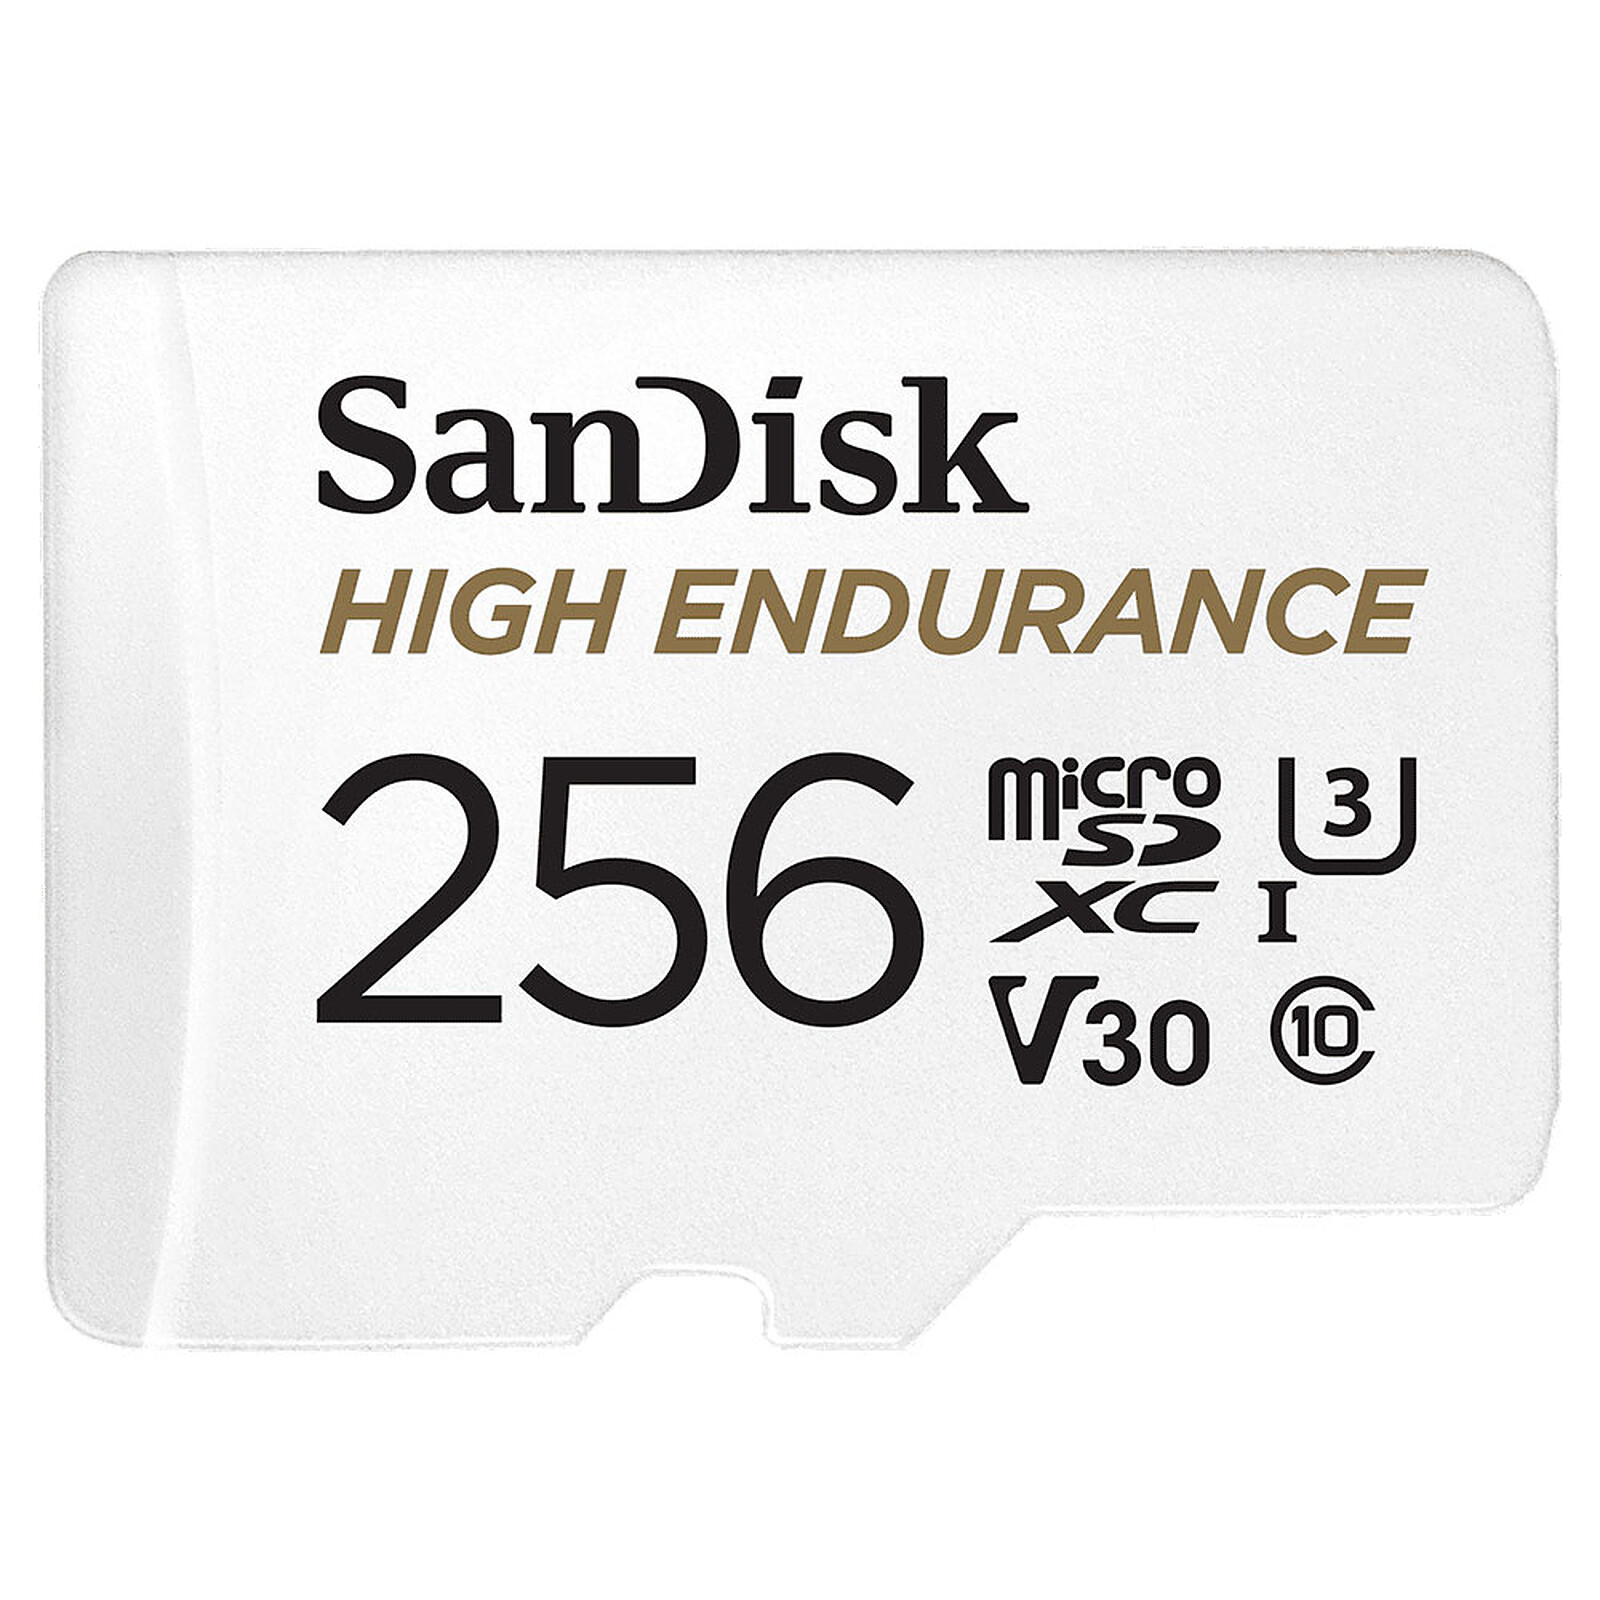 SanDisk High Endurance UHS-I U3 V30 SD Adapter - Memory card on LDLC